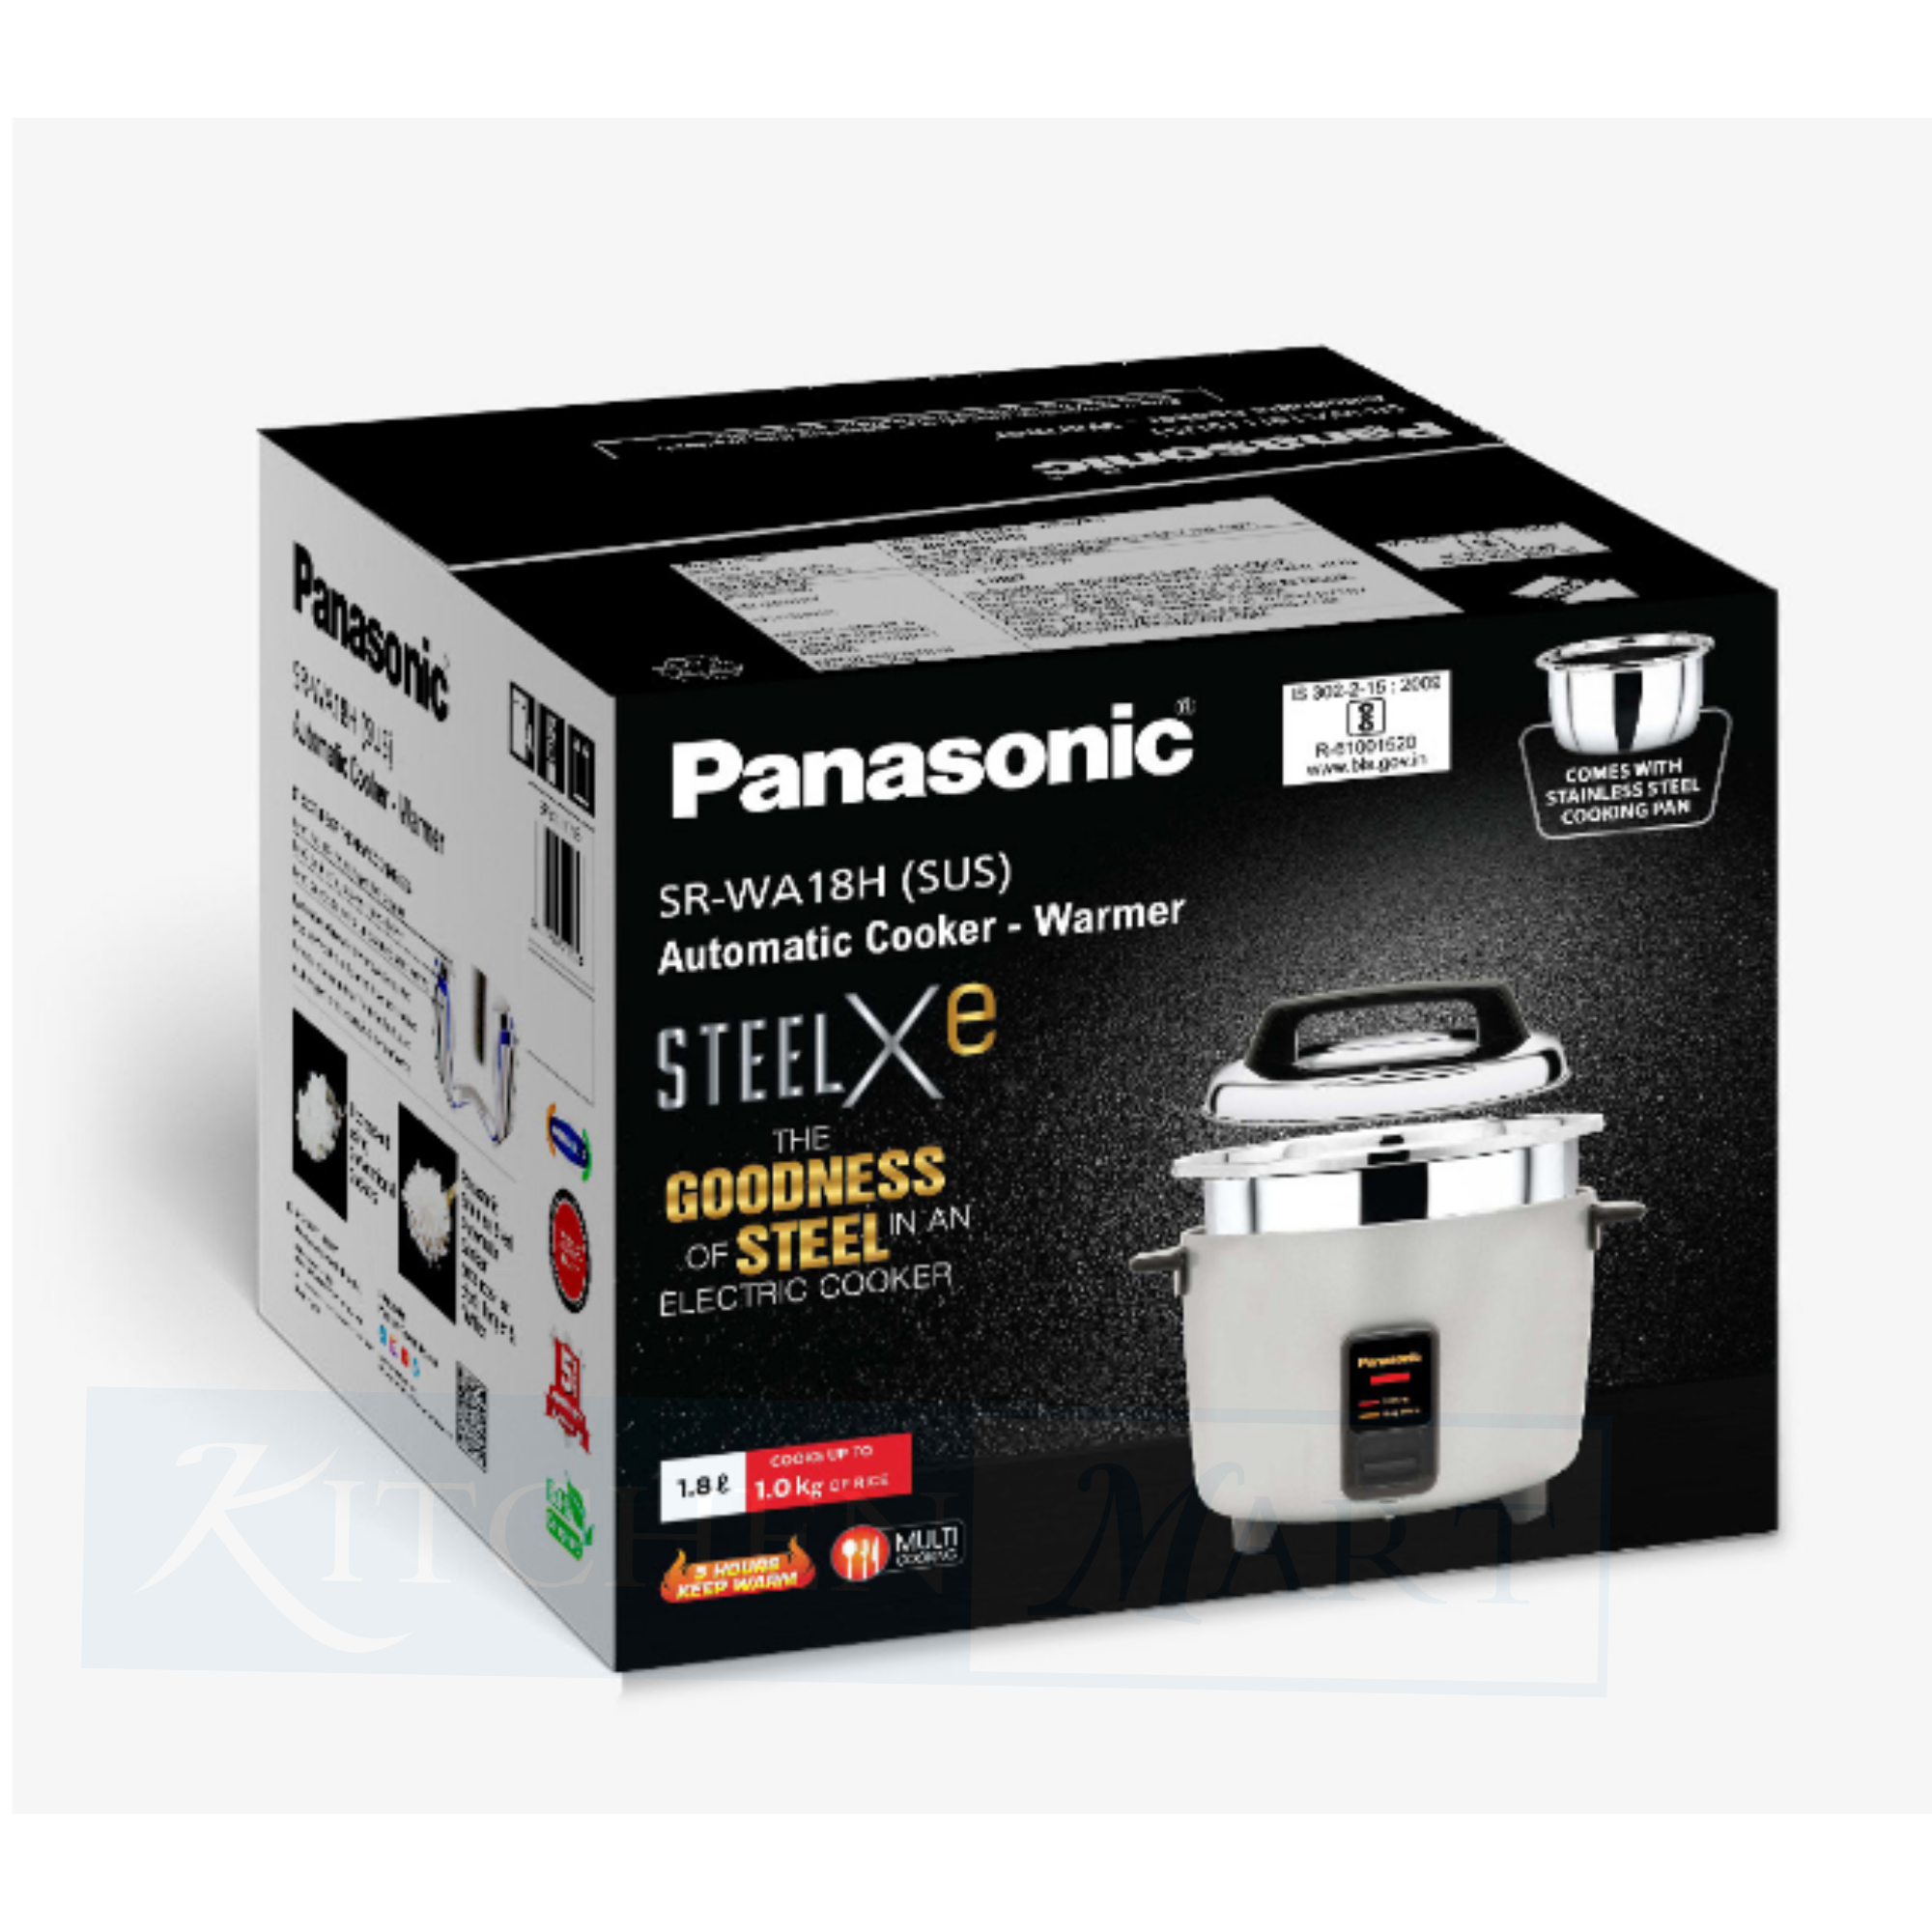 Panasonic SR-WA18H (SUS) - Premium Triply Stainless Steel Rice Cooker + additional cooking Pan